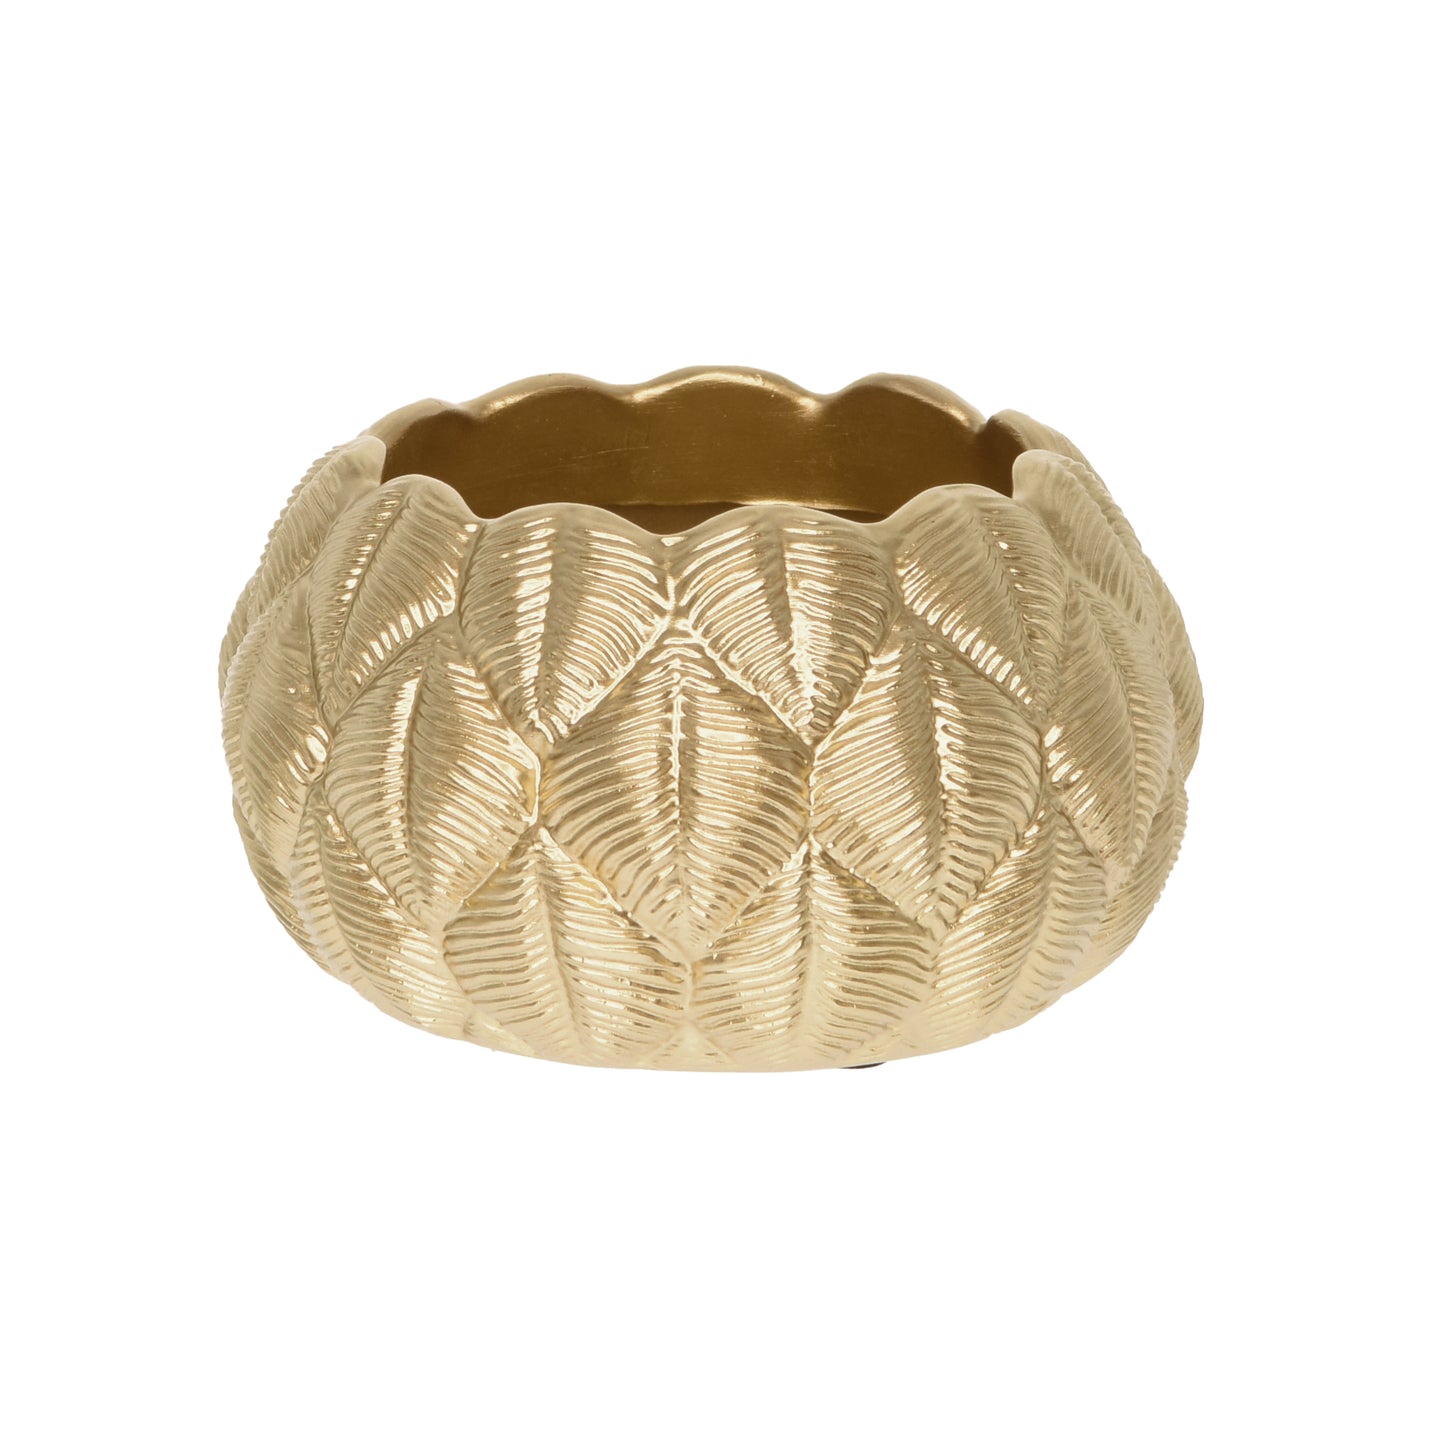 Patterned bowl 14 x 8 cm - gold